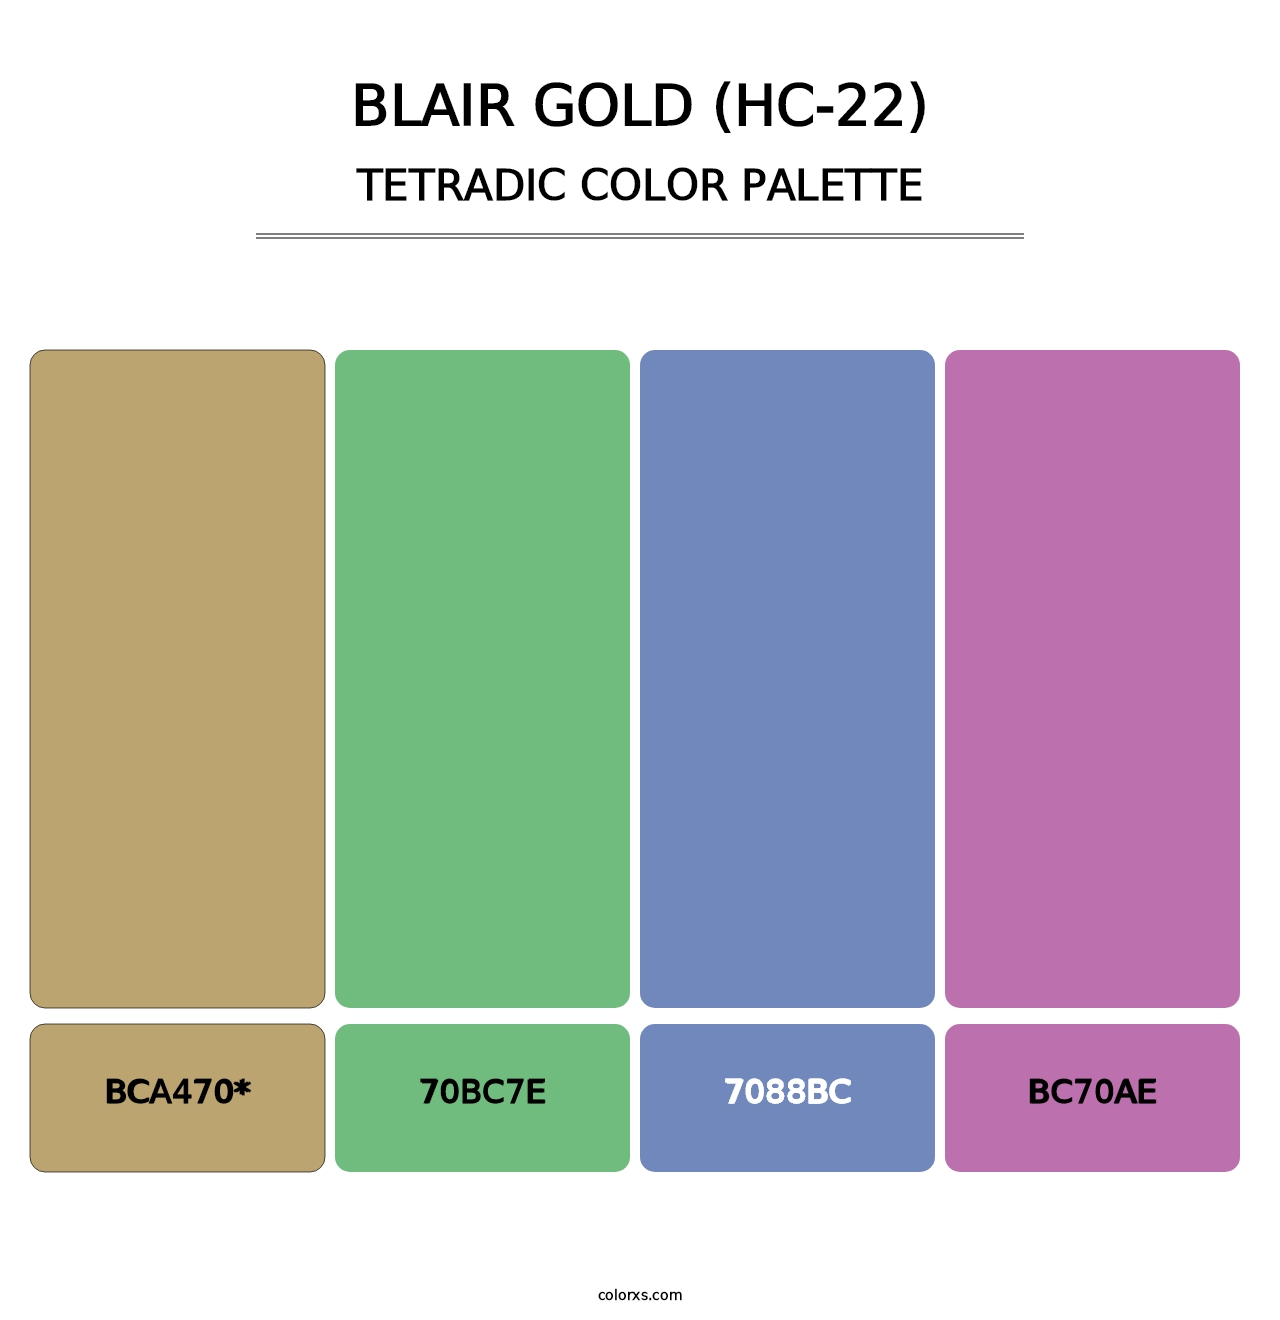 Blair Gold (HC-22) - Tetradic Color Palette